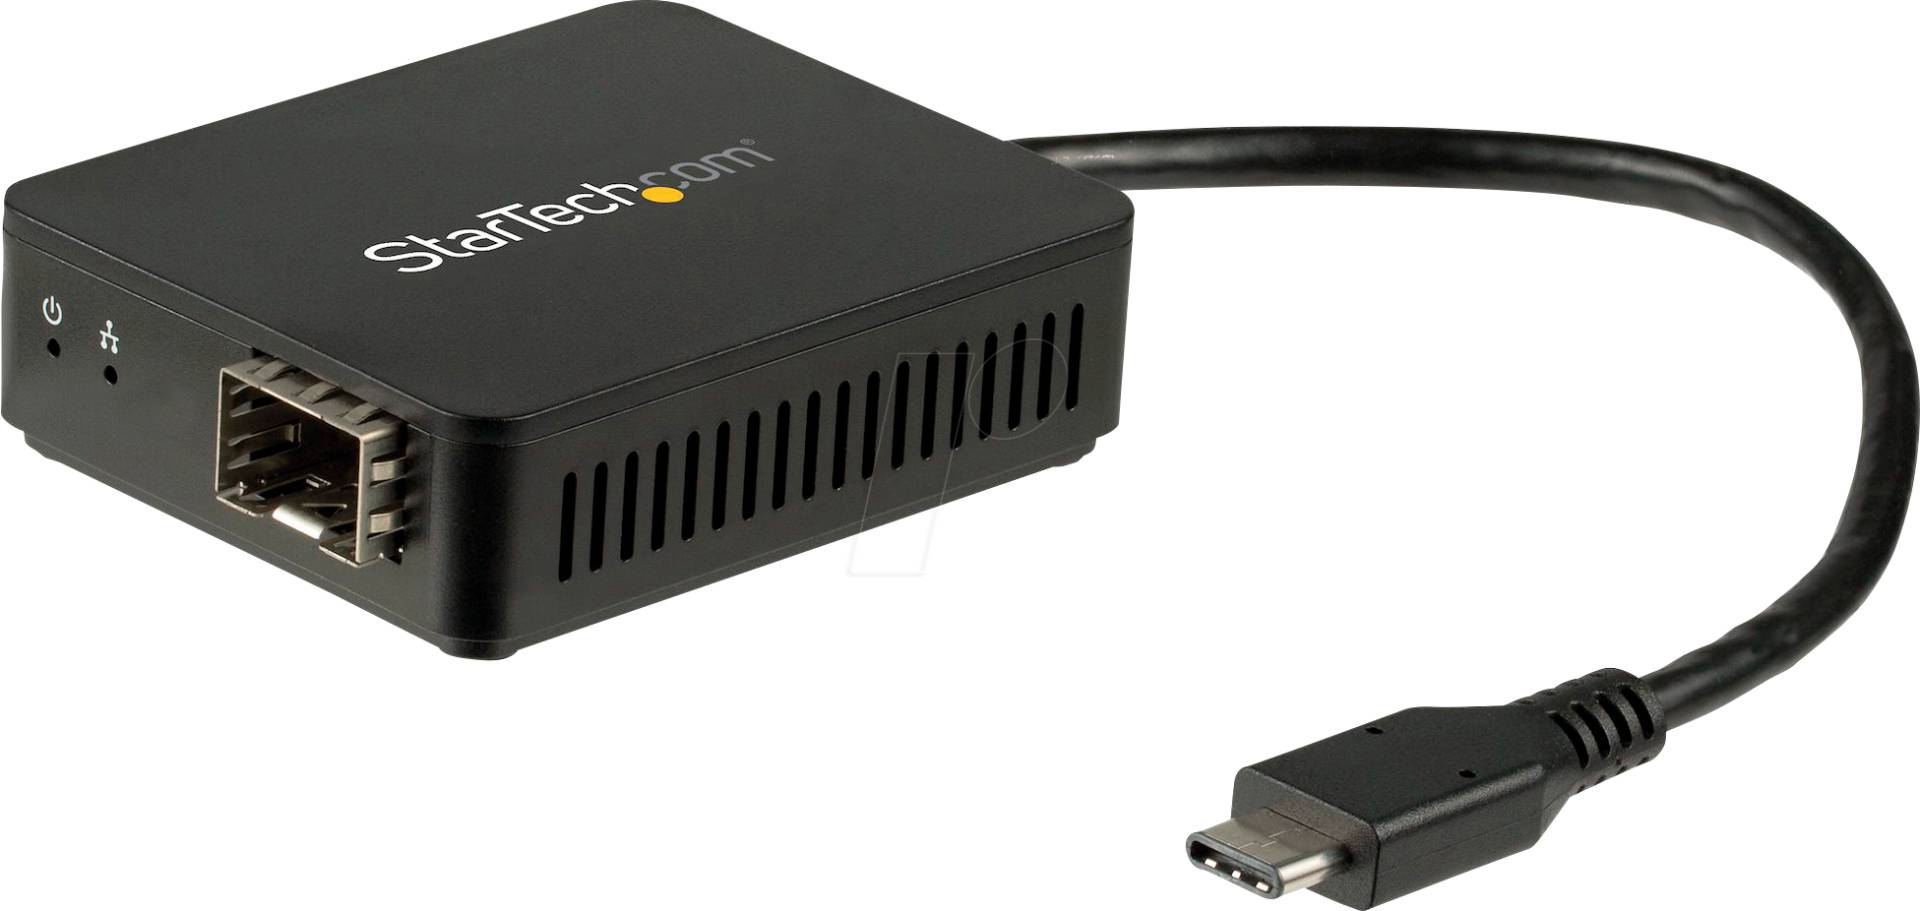 ST US1GC30SFP - Netzwerkkarte, USB-C, Fast Ethernet, 1x SFP von StarTech.com